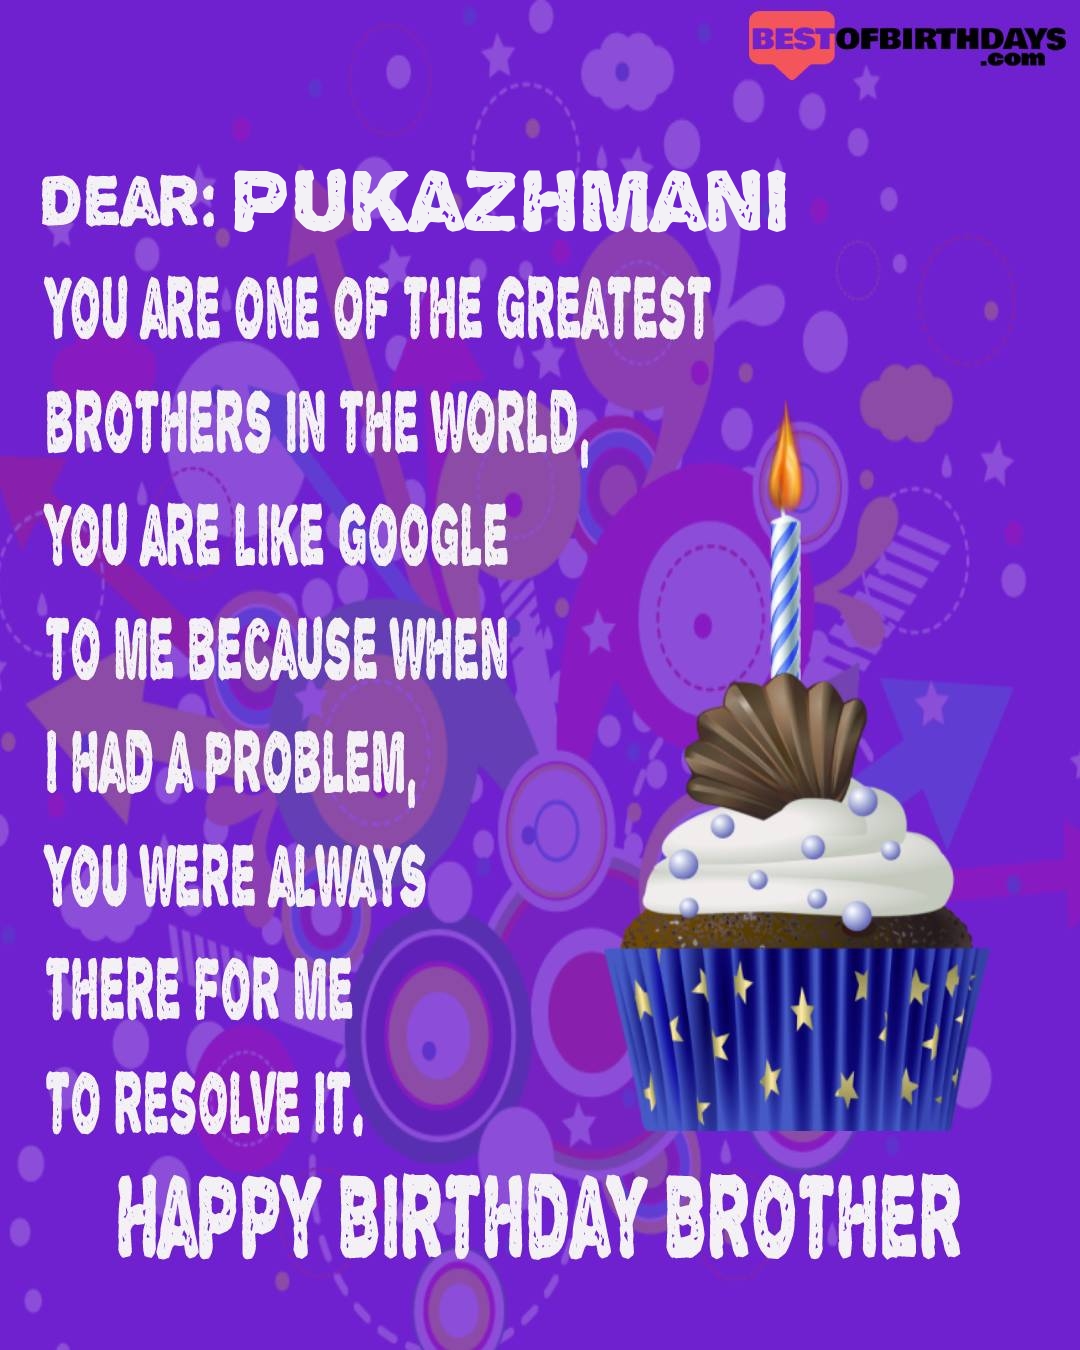 Happy birthday pukazhmani bhai brother bro